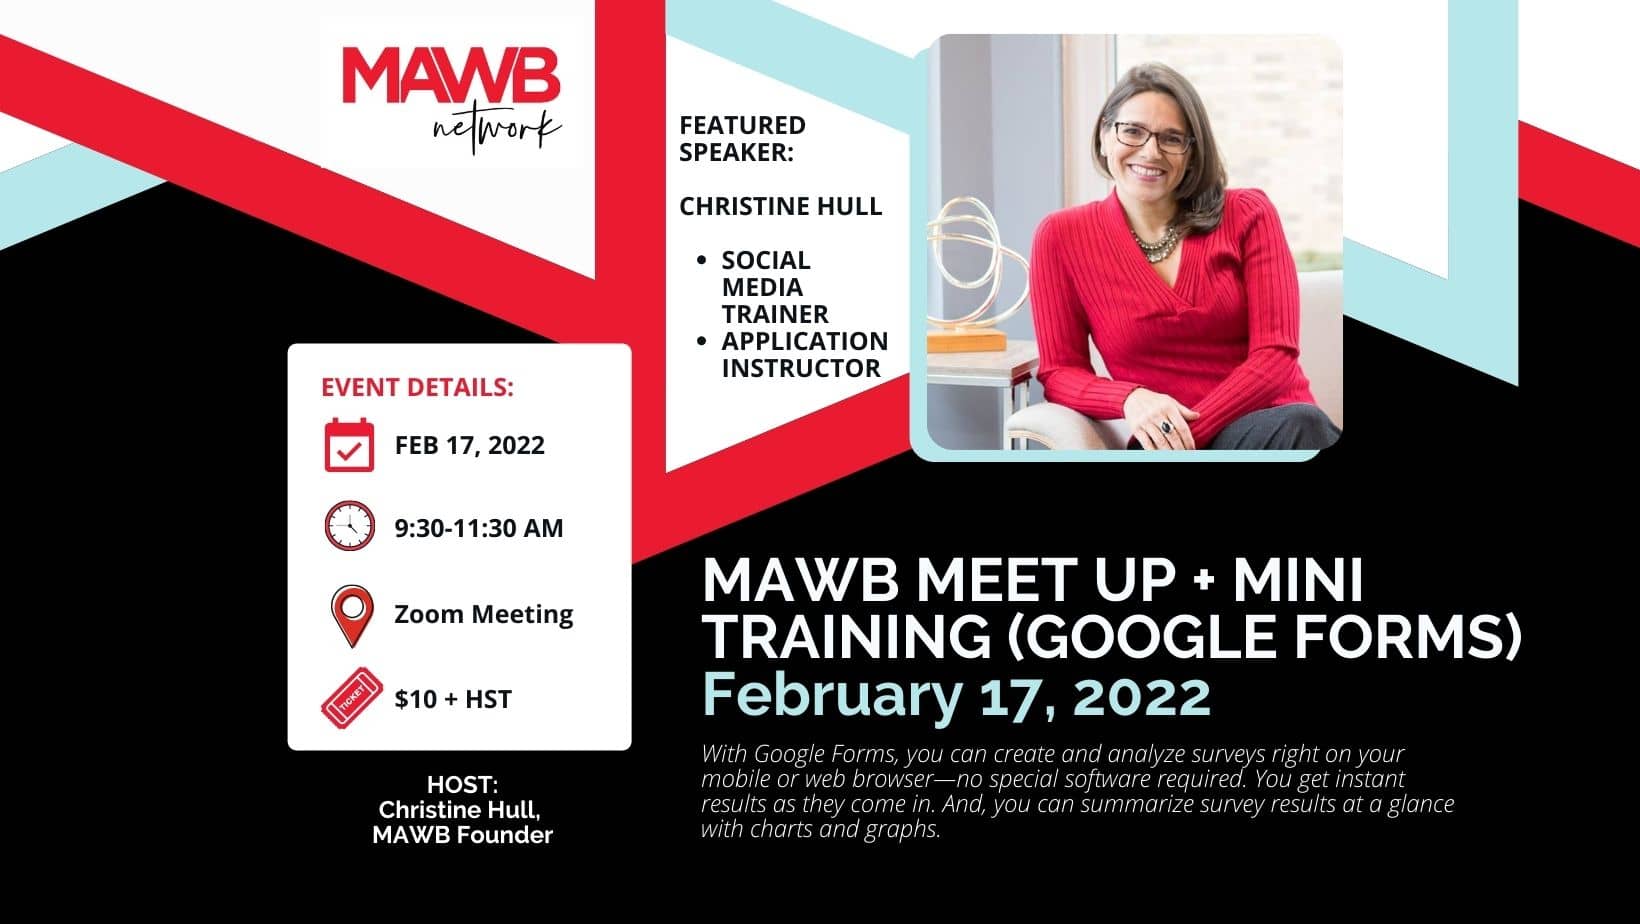 MAWB Meet Up - February 2022 with Mini Training, How to Create a Google Form